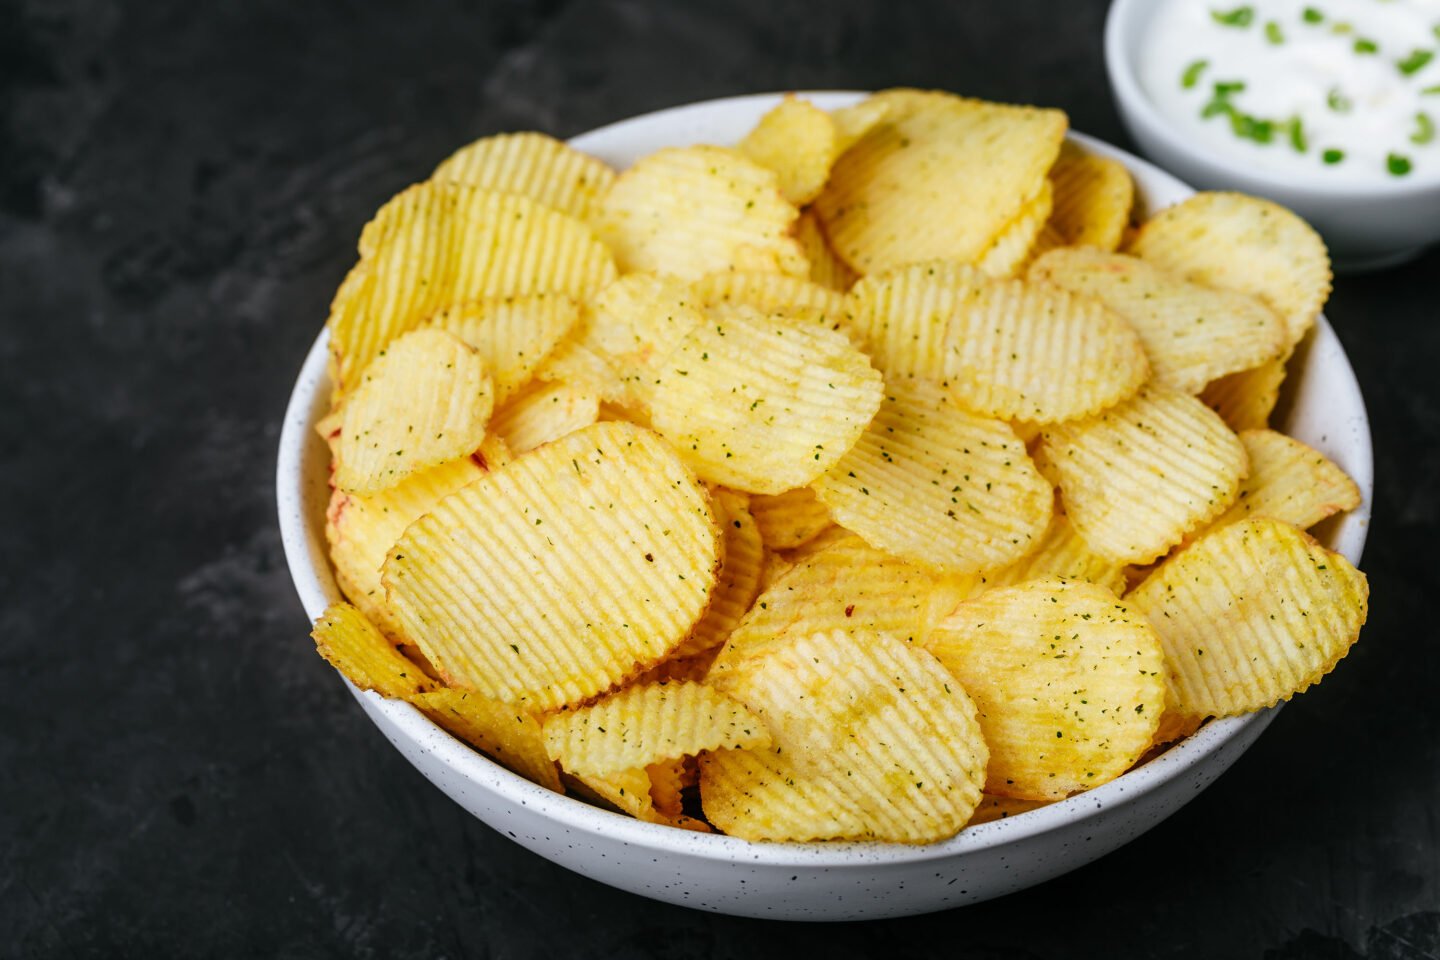 crispy potato chips and sour cream dip